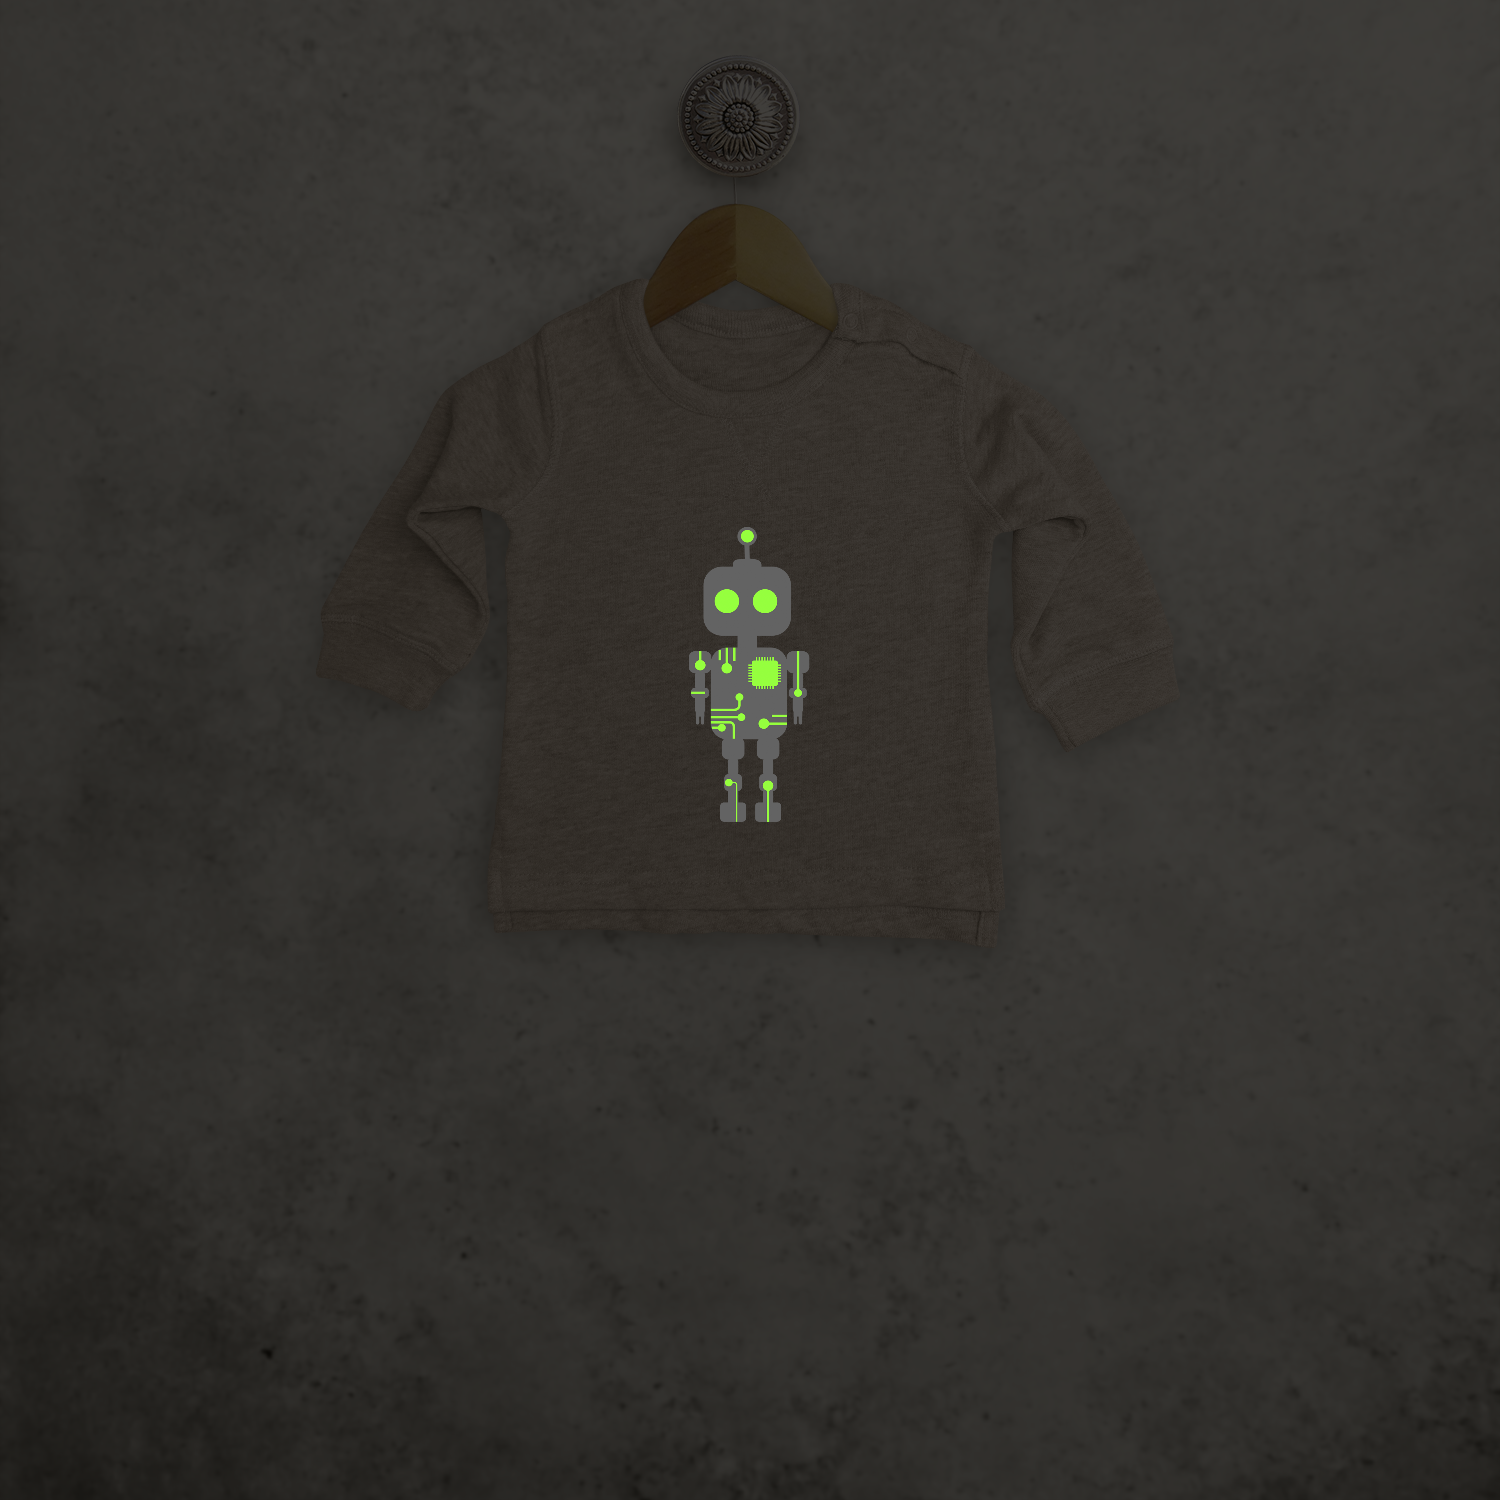 Robot glow in the dark baby sweater